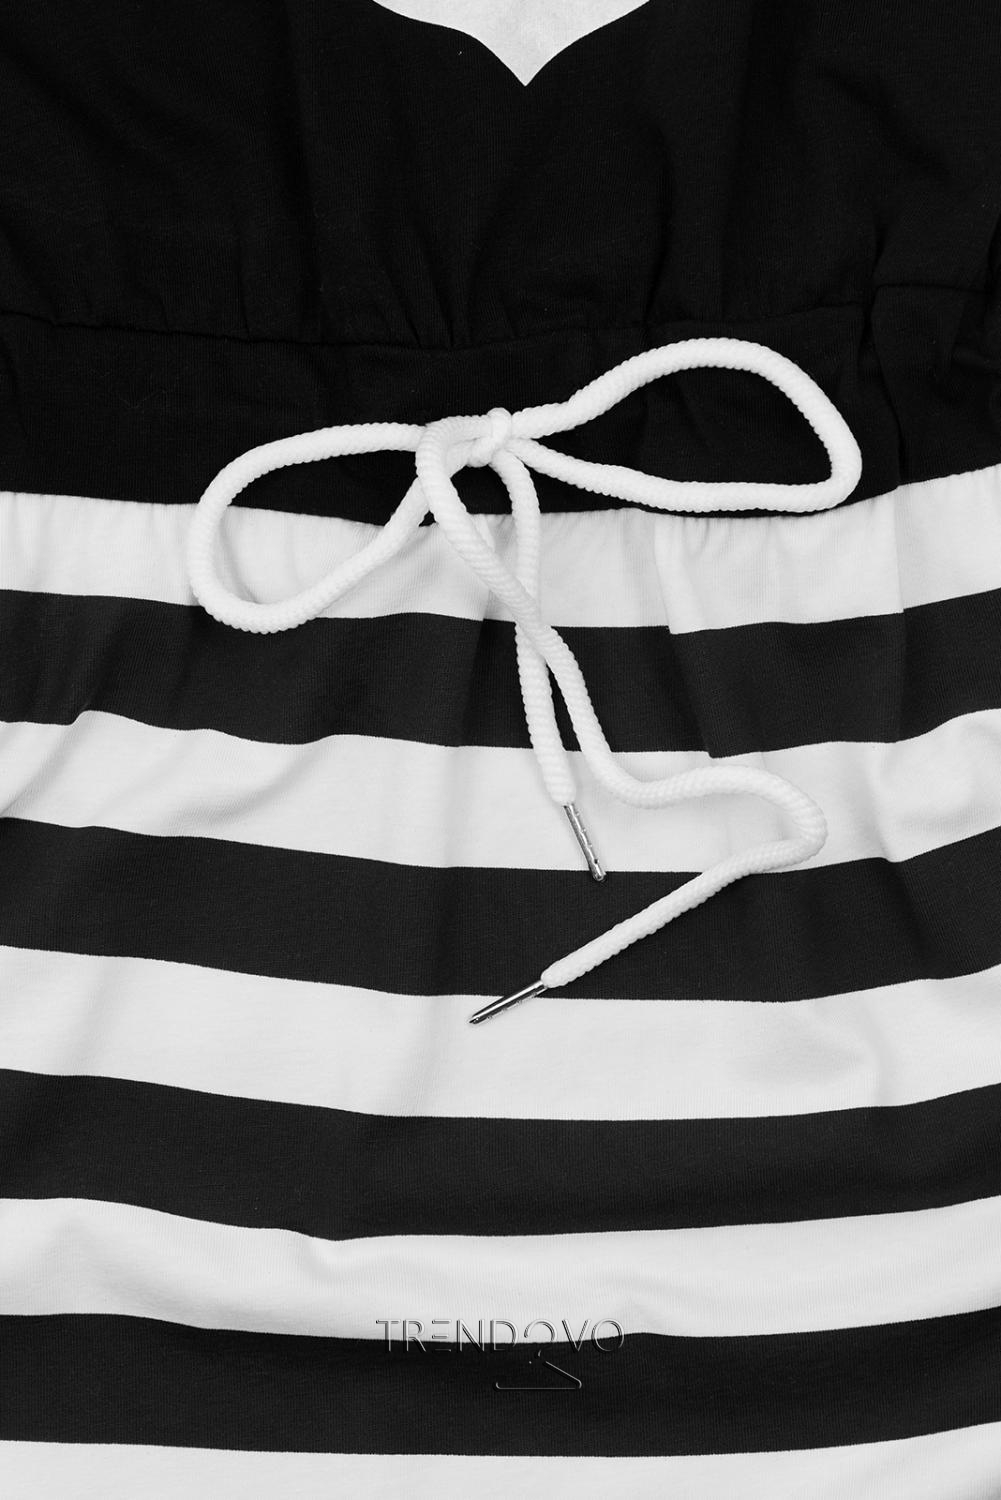 Čierno-biele šaty s kotvou X.